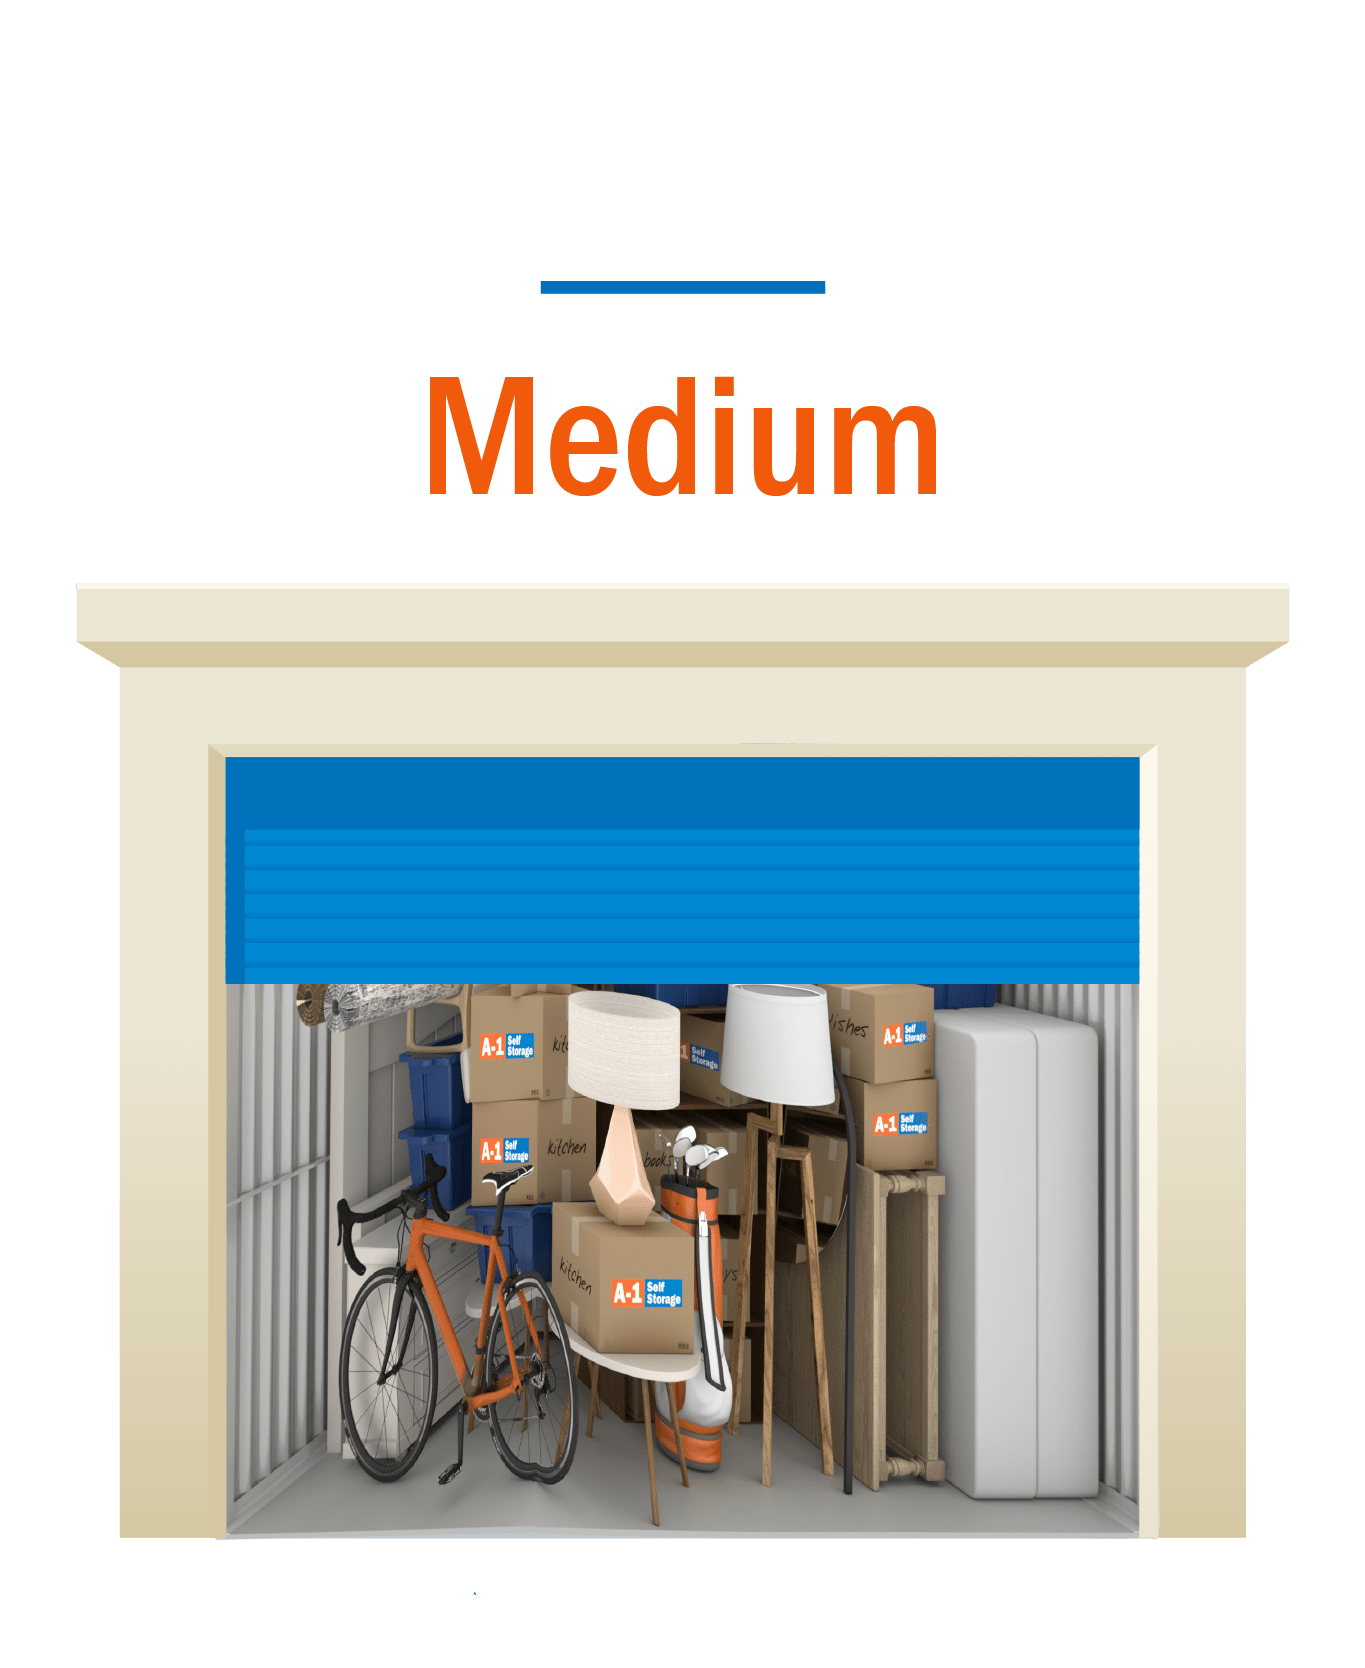 Medium storage unit graphic, door open